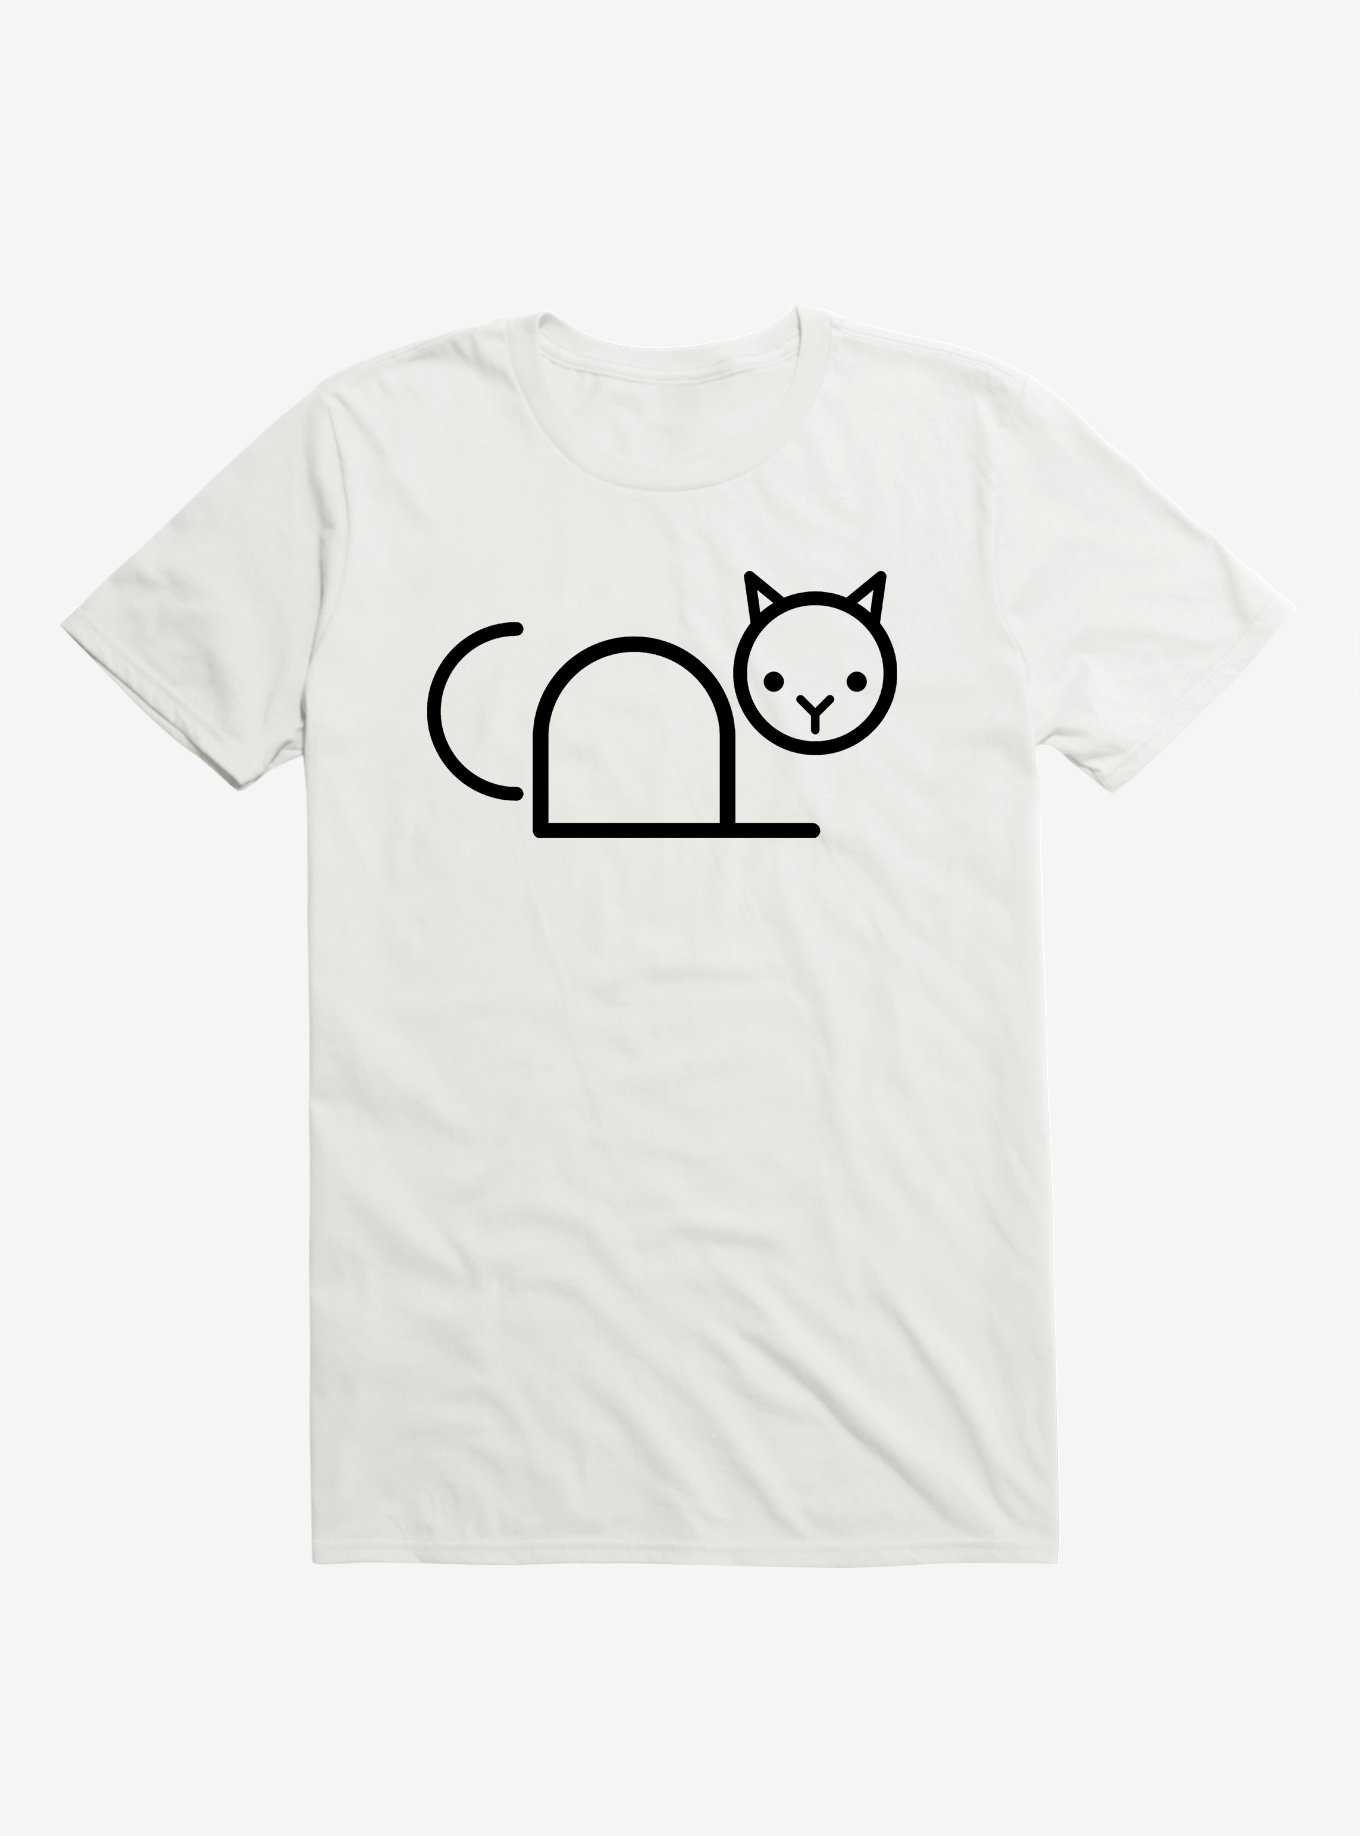 Copy Cat White T-Shirt, , hi-res